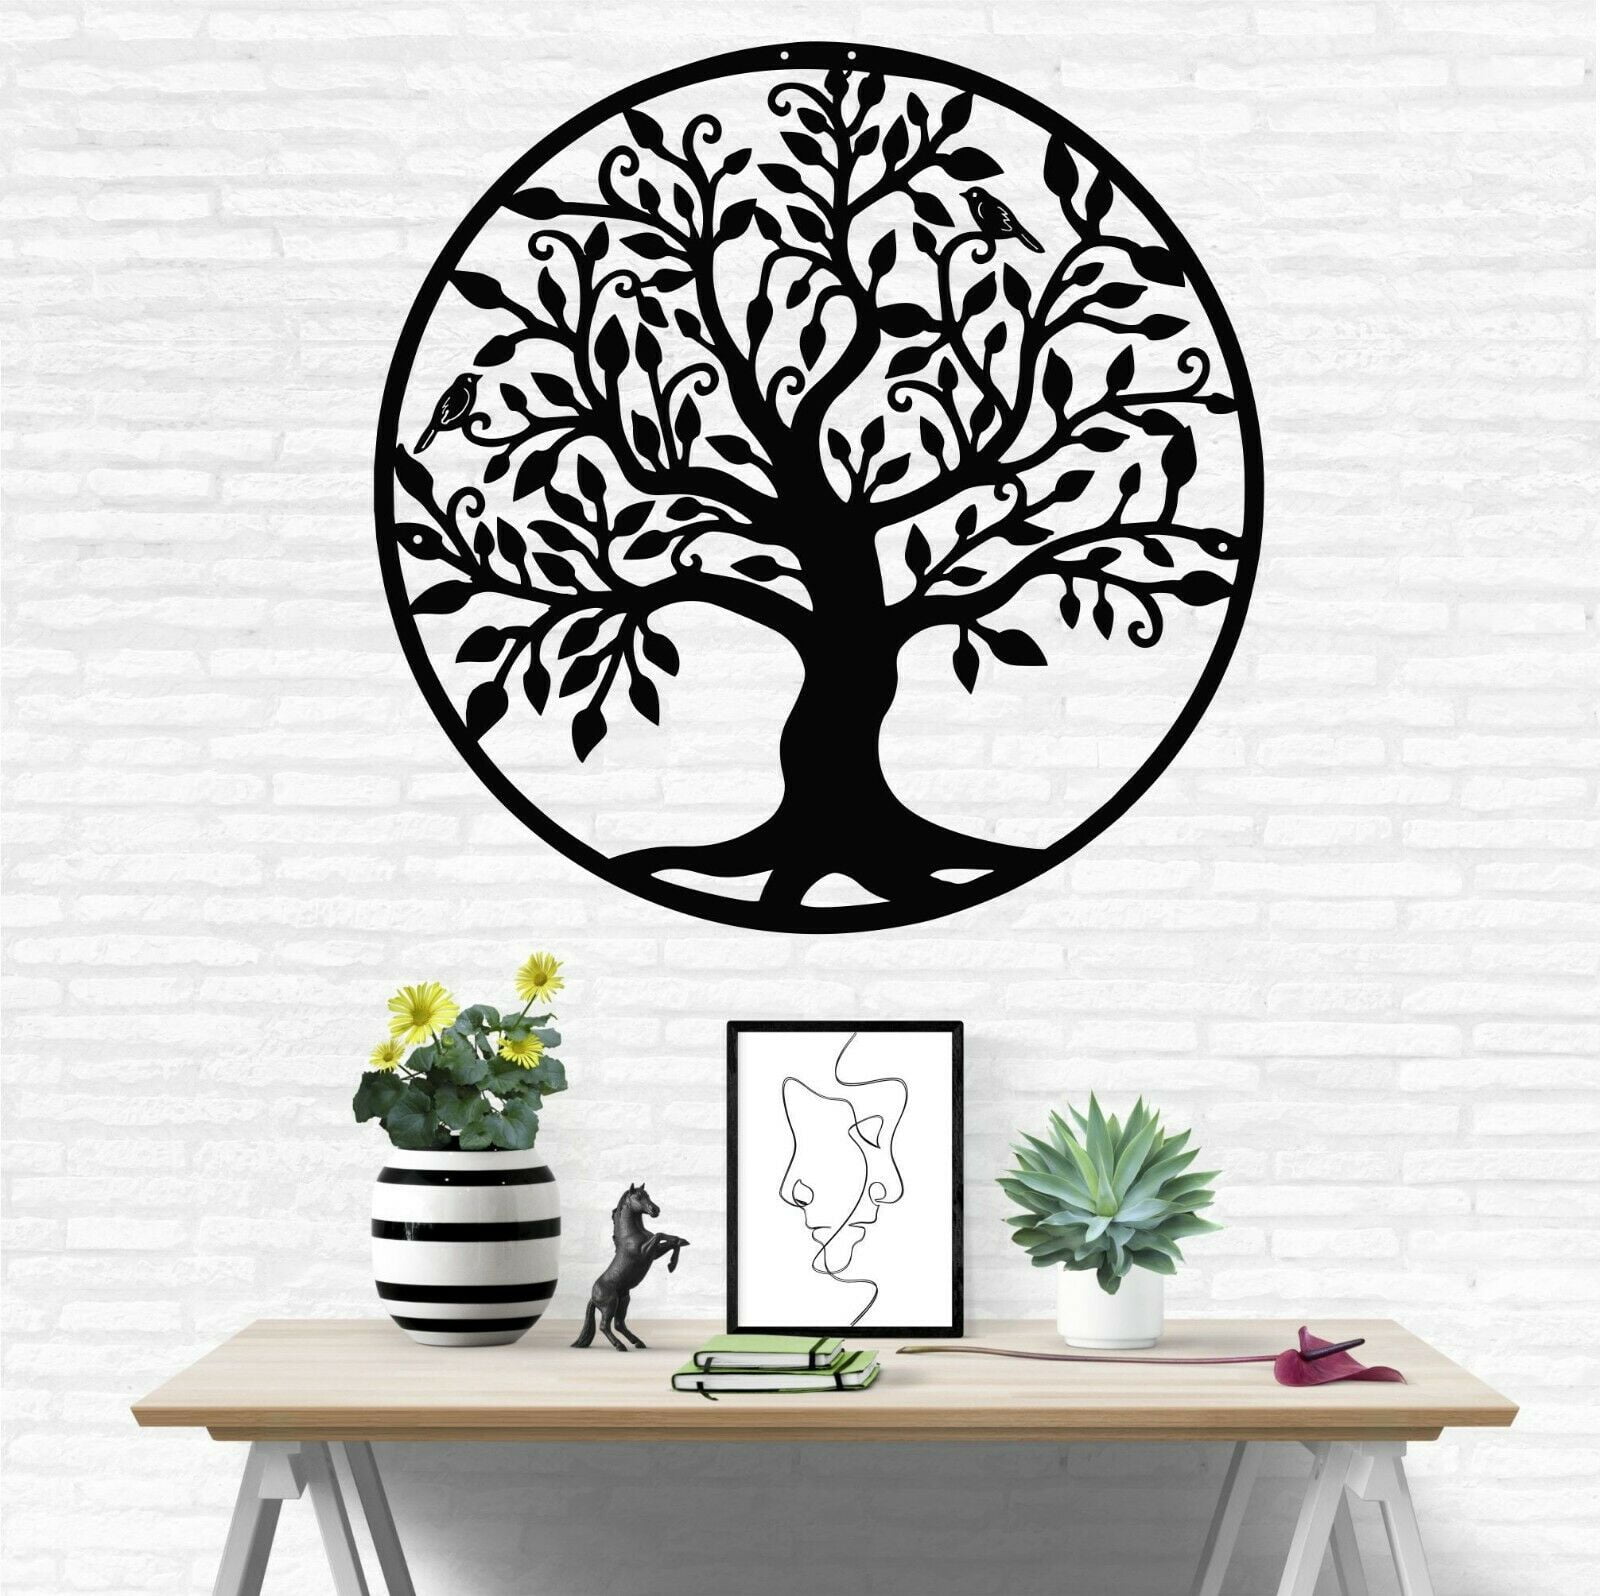 Metal Family Tree Wall Decor Home Living Room Decoration Tree of Life Art 5056 